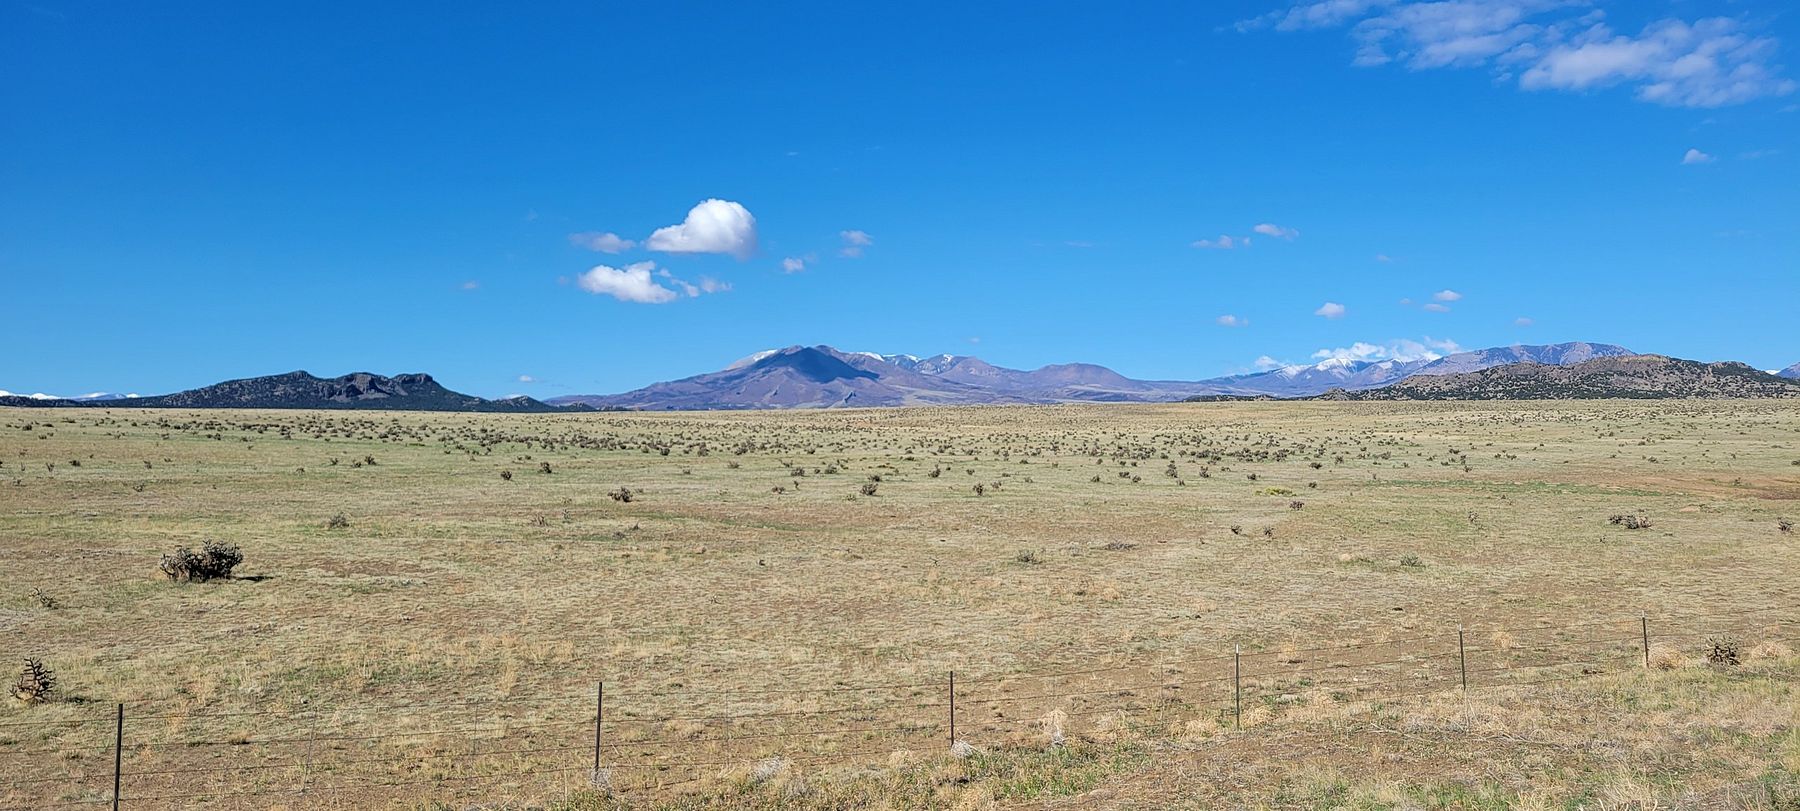 139 Acres of Recreational Land & Farm for Sale in Walsenburg, Colorado